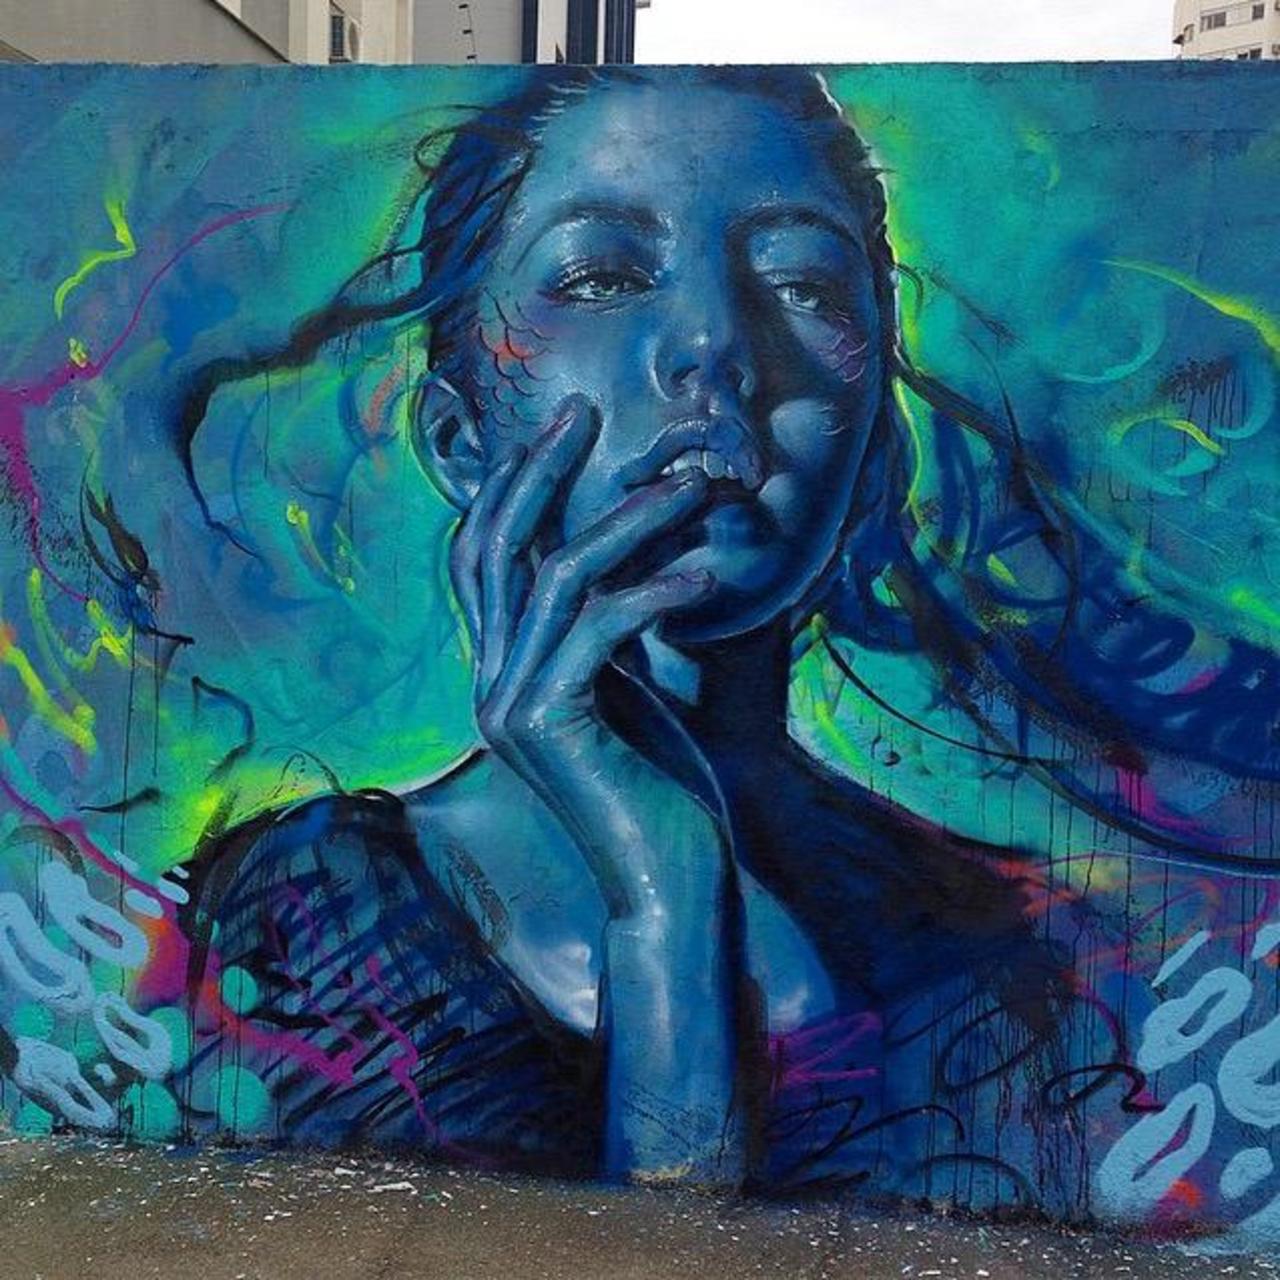 Thiago Valdi new Street Art piece titled 'Day Dreamer'

#art #mural #graffiti #streetart http://t.co/v7n6ZF709K